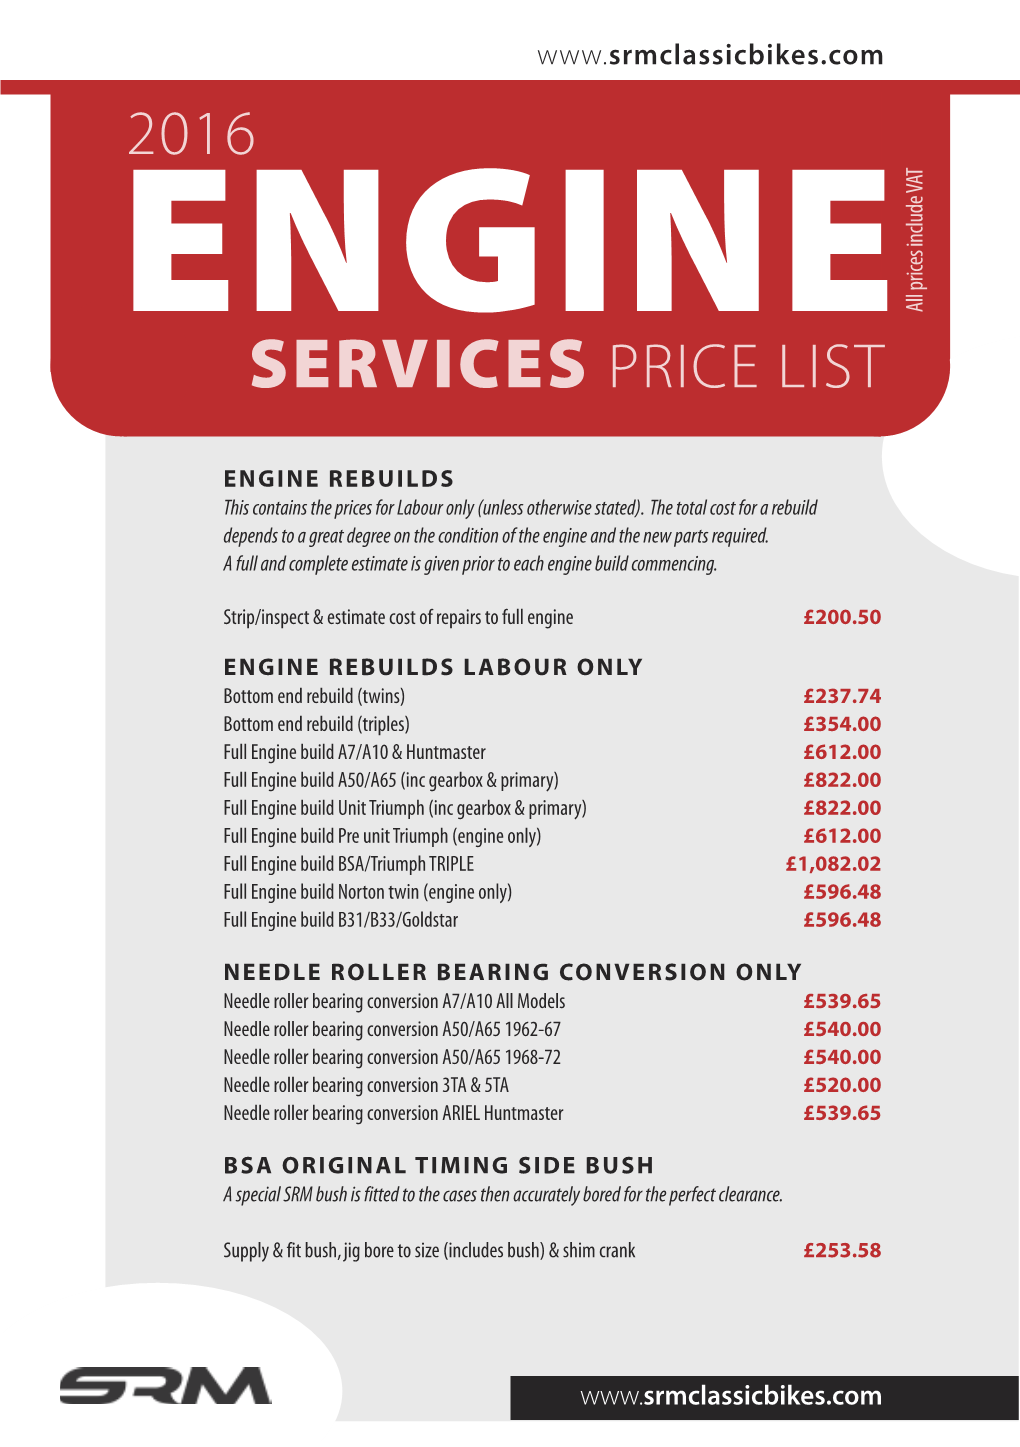 Services Price List 2016